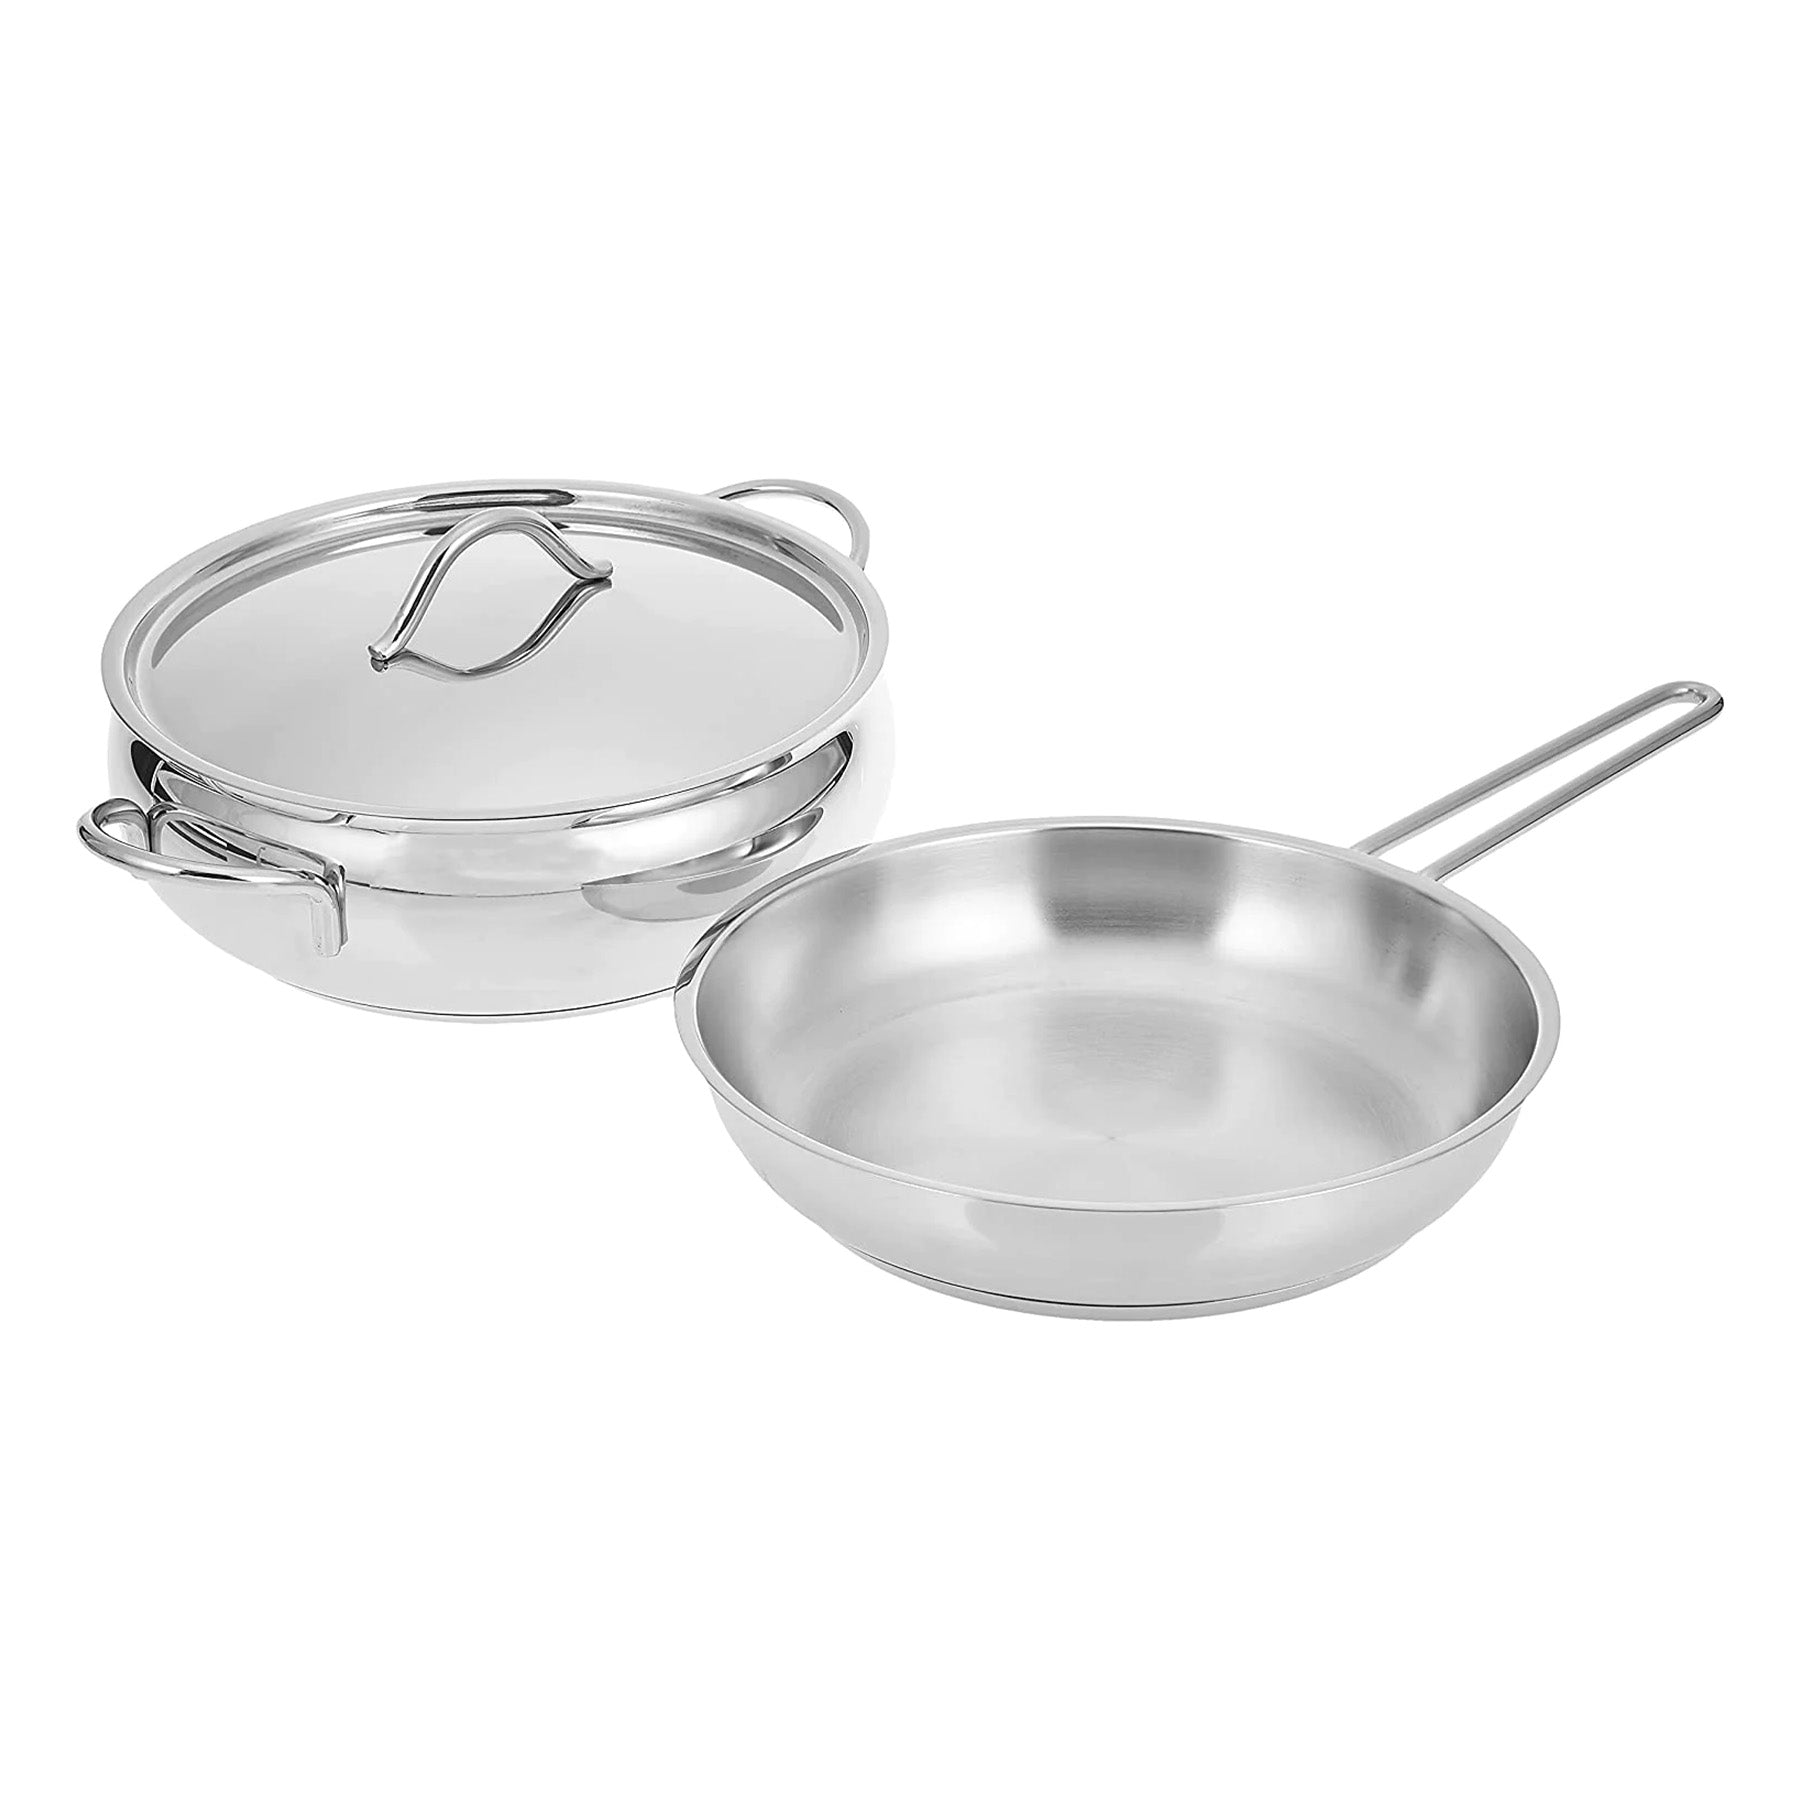 Set of casseroles 11 Pcs- Silver